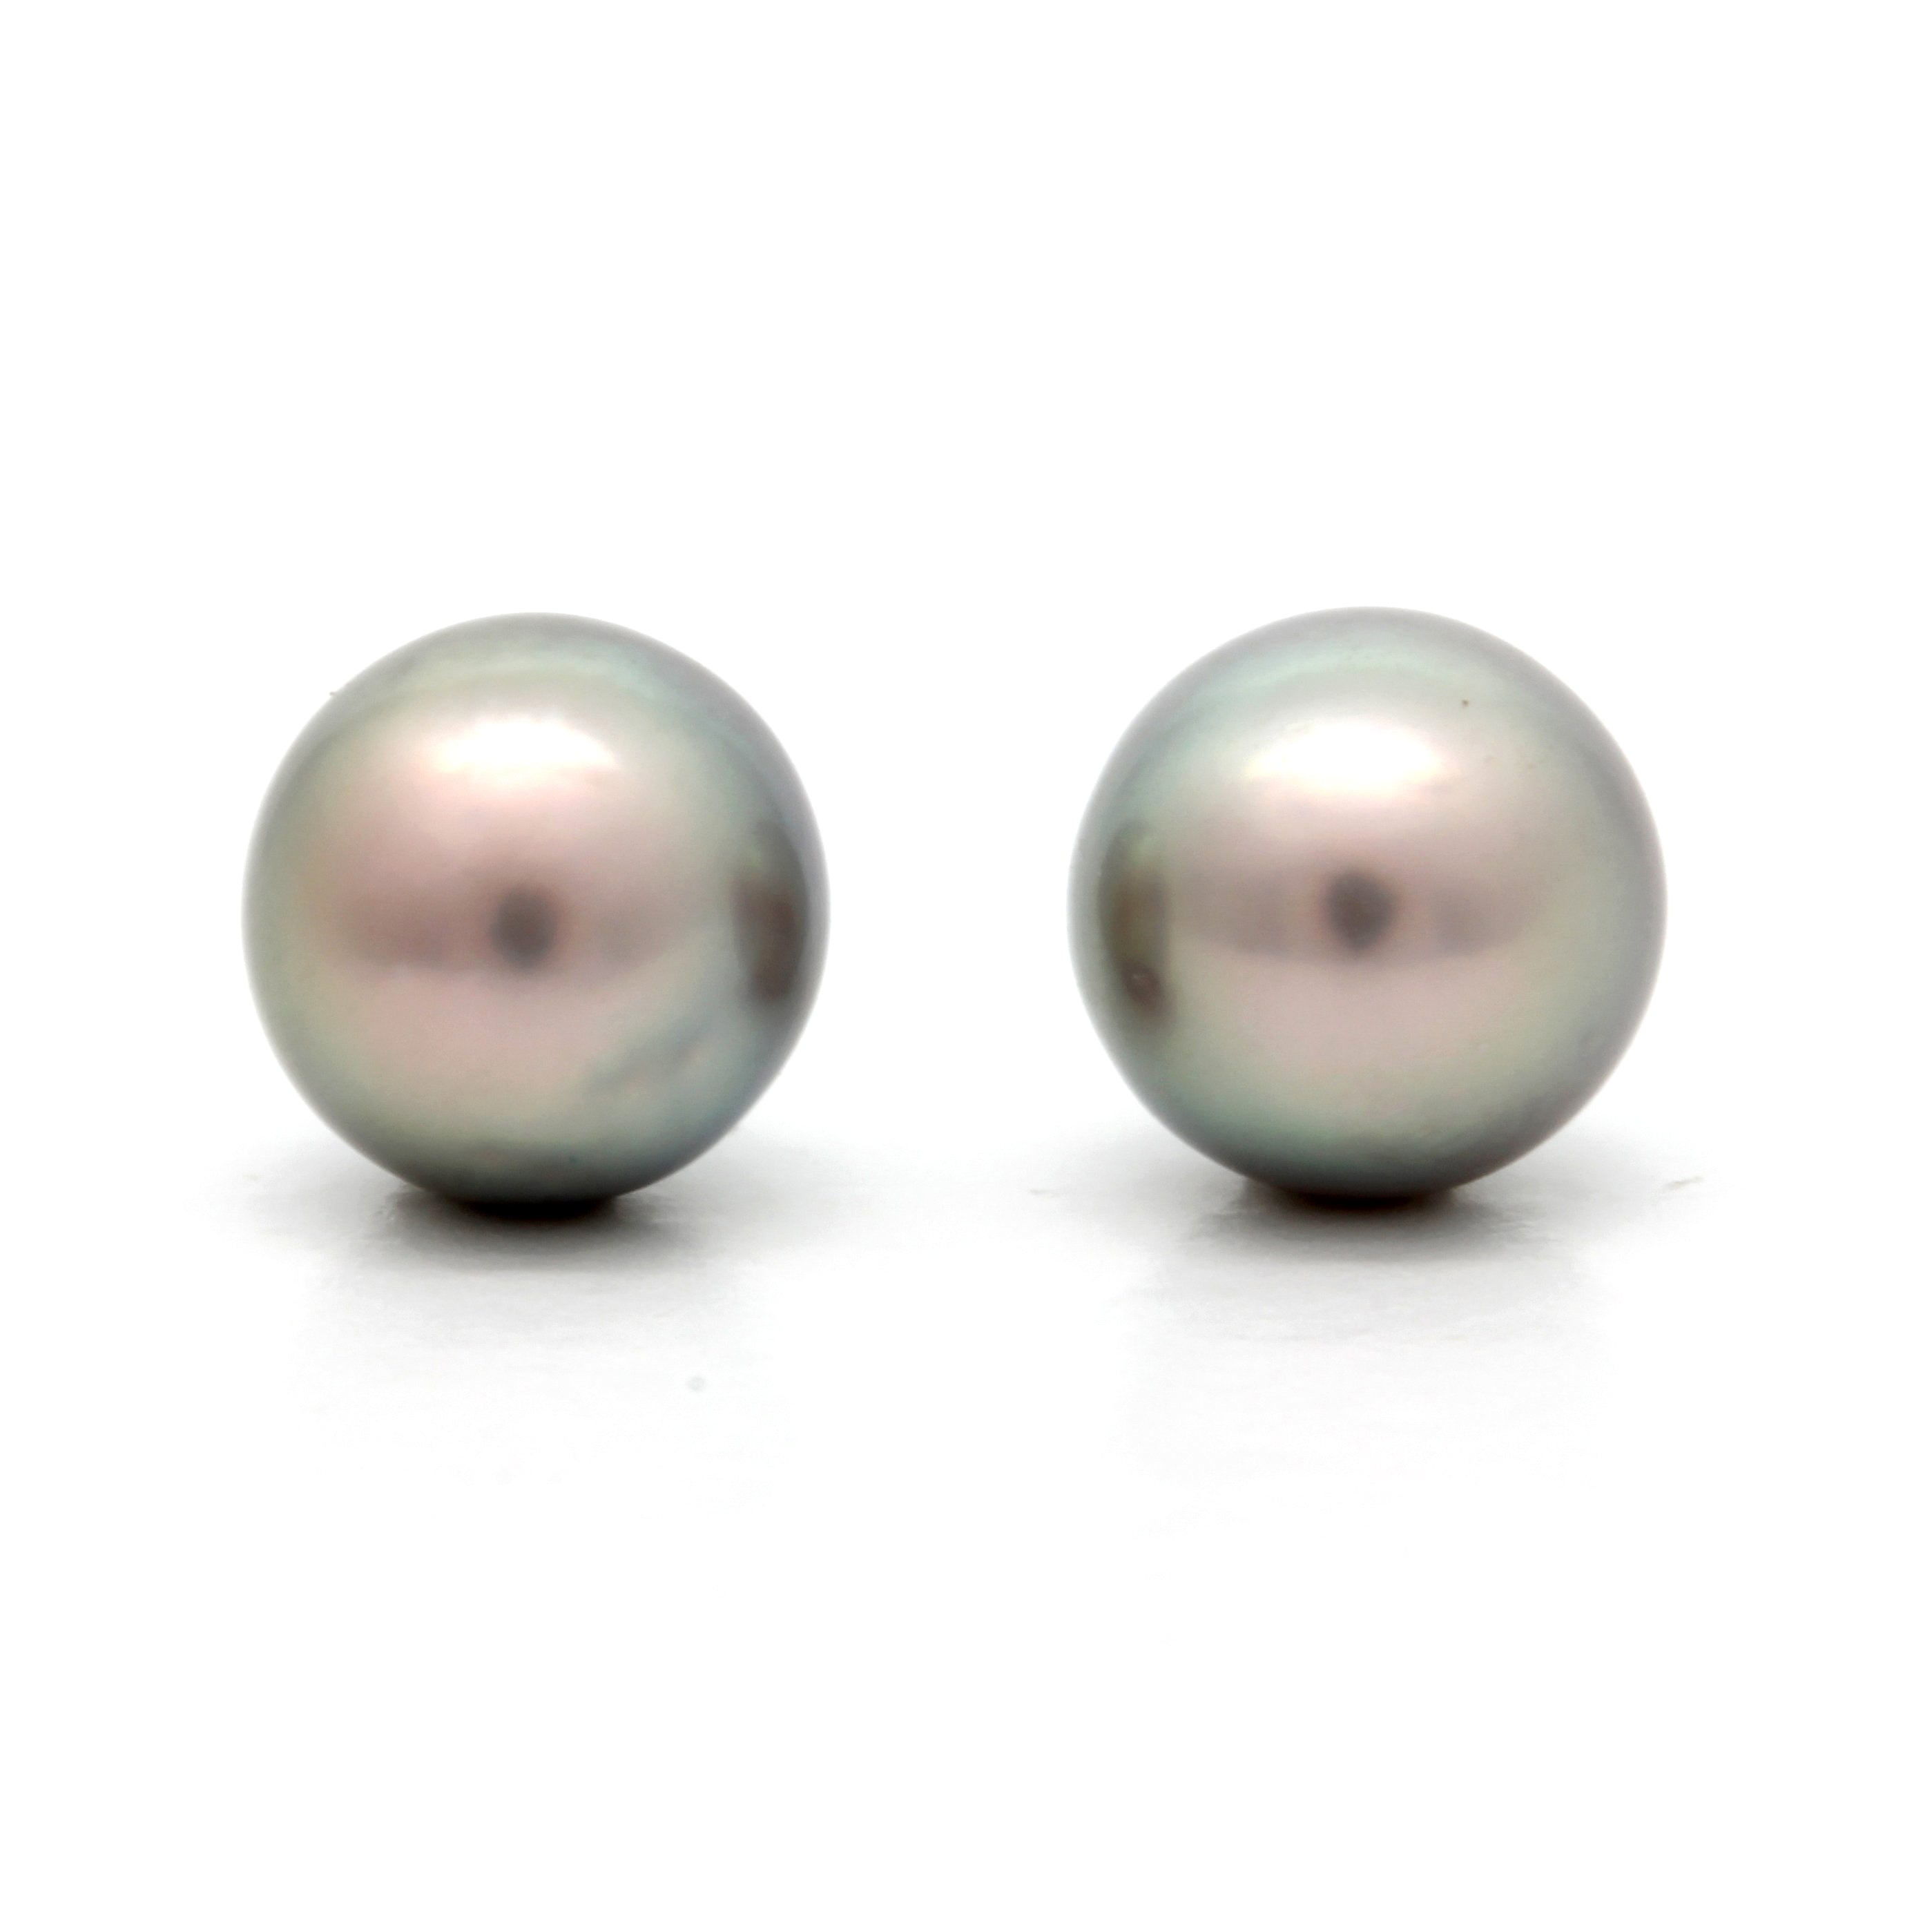 Pair of 9.5 mm Baroque Cortez Pearls